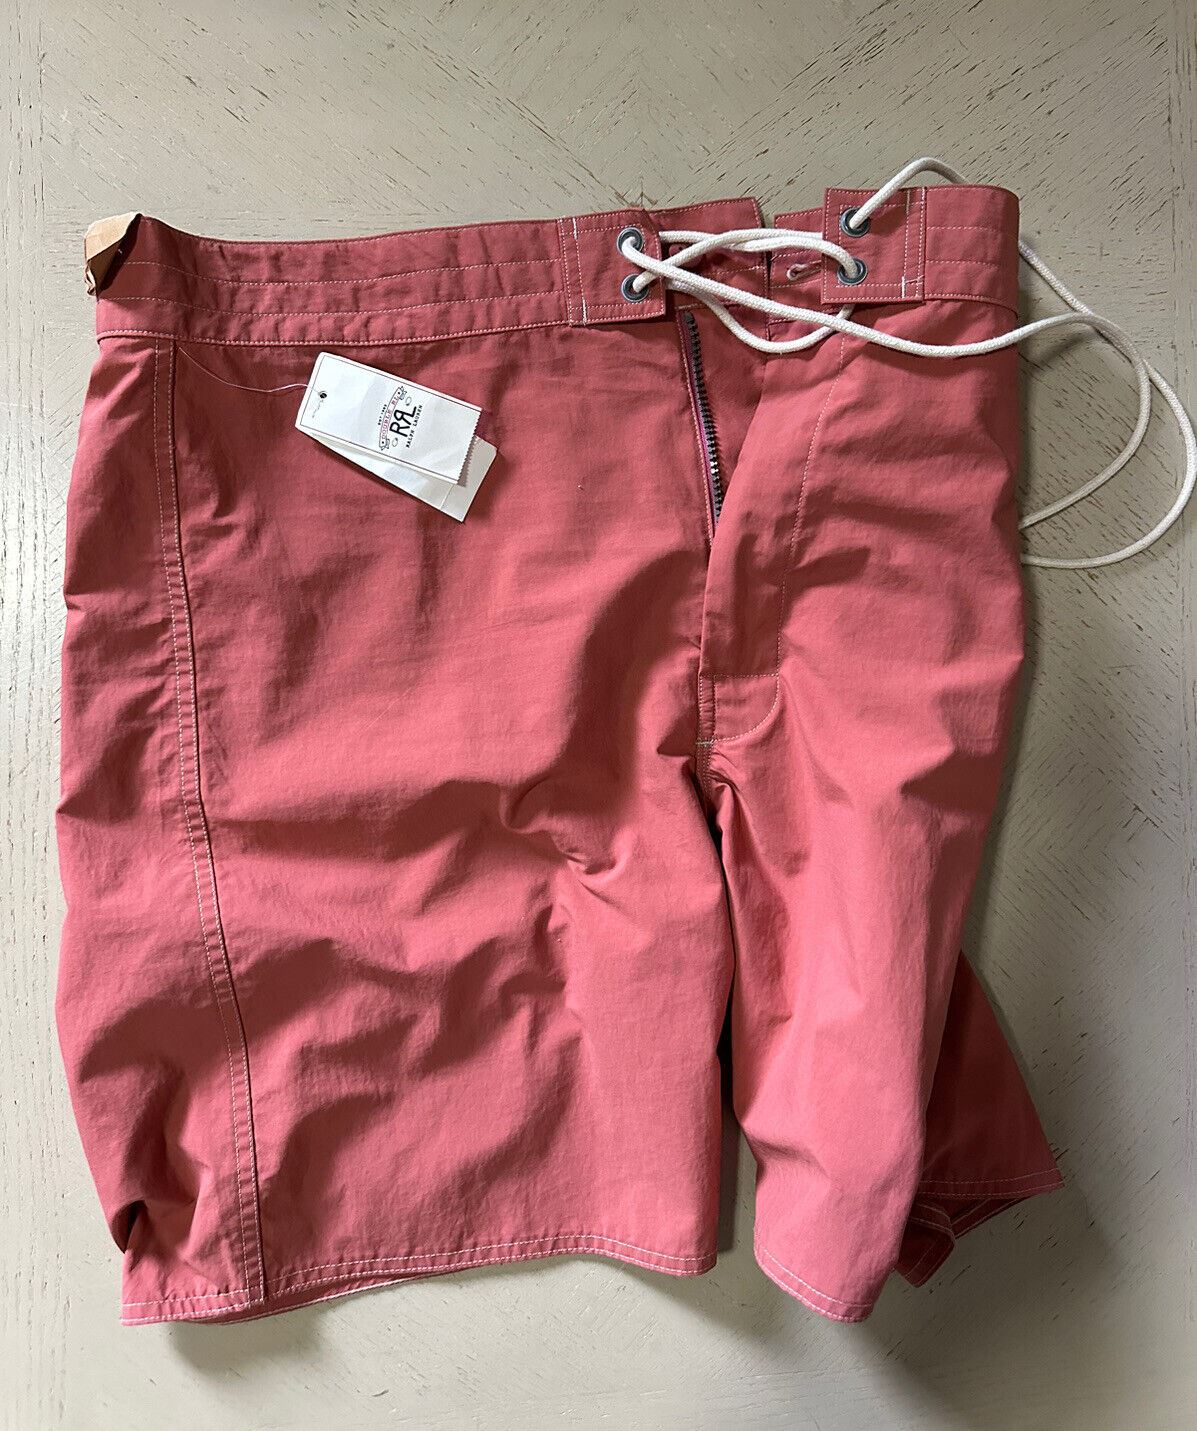 Мужские шорты NWT DOUBLE RL Ralph Lauren, красные, размер 36